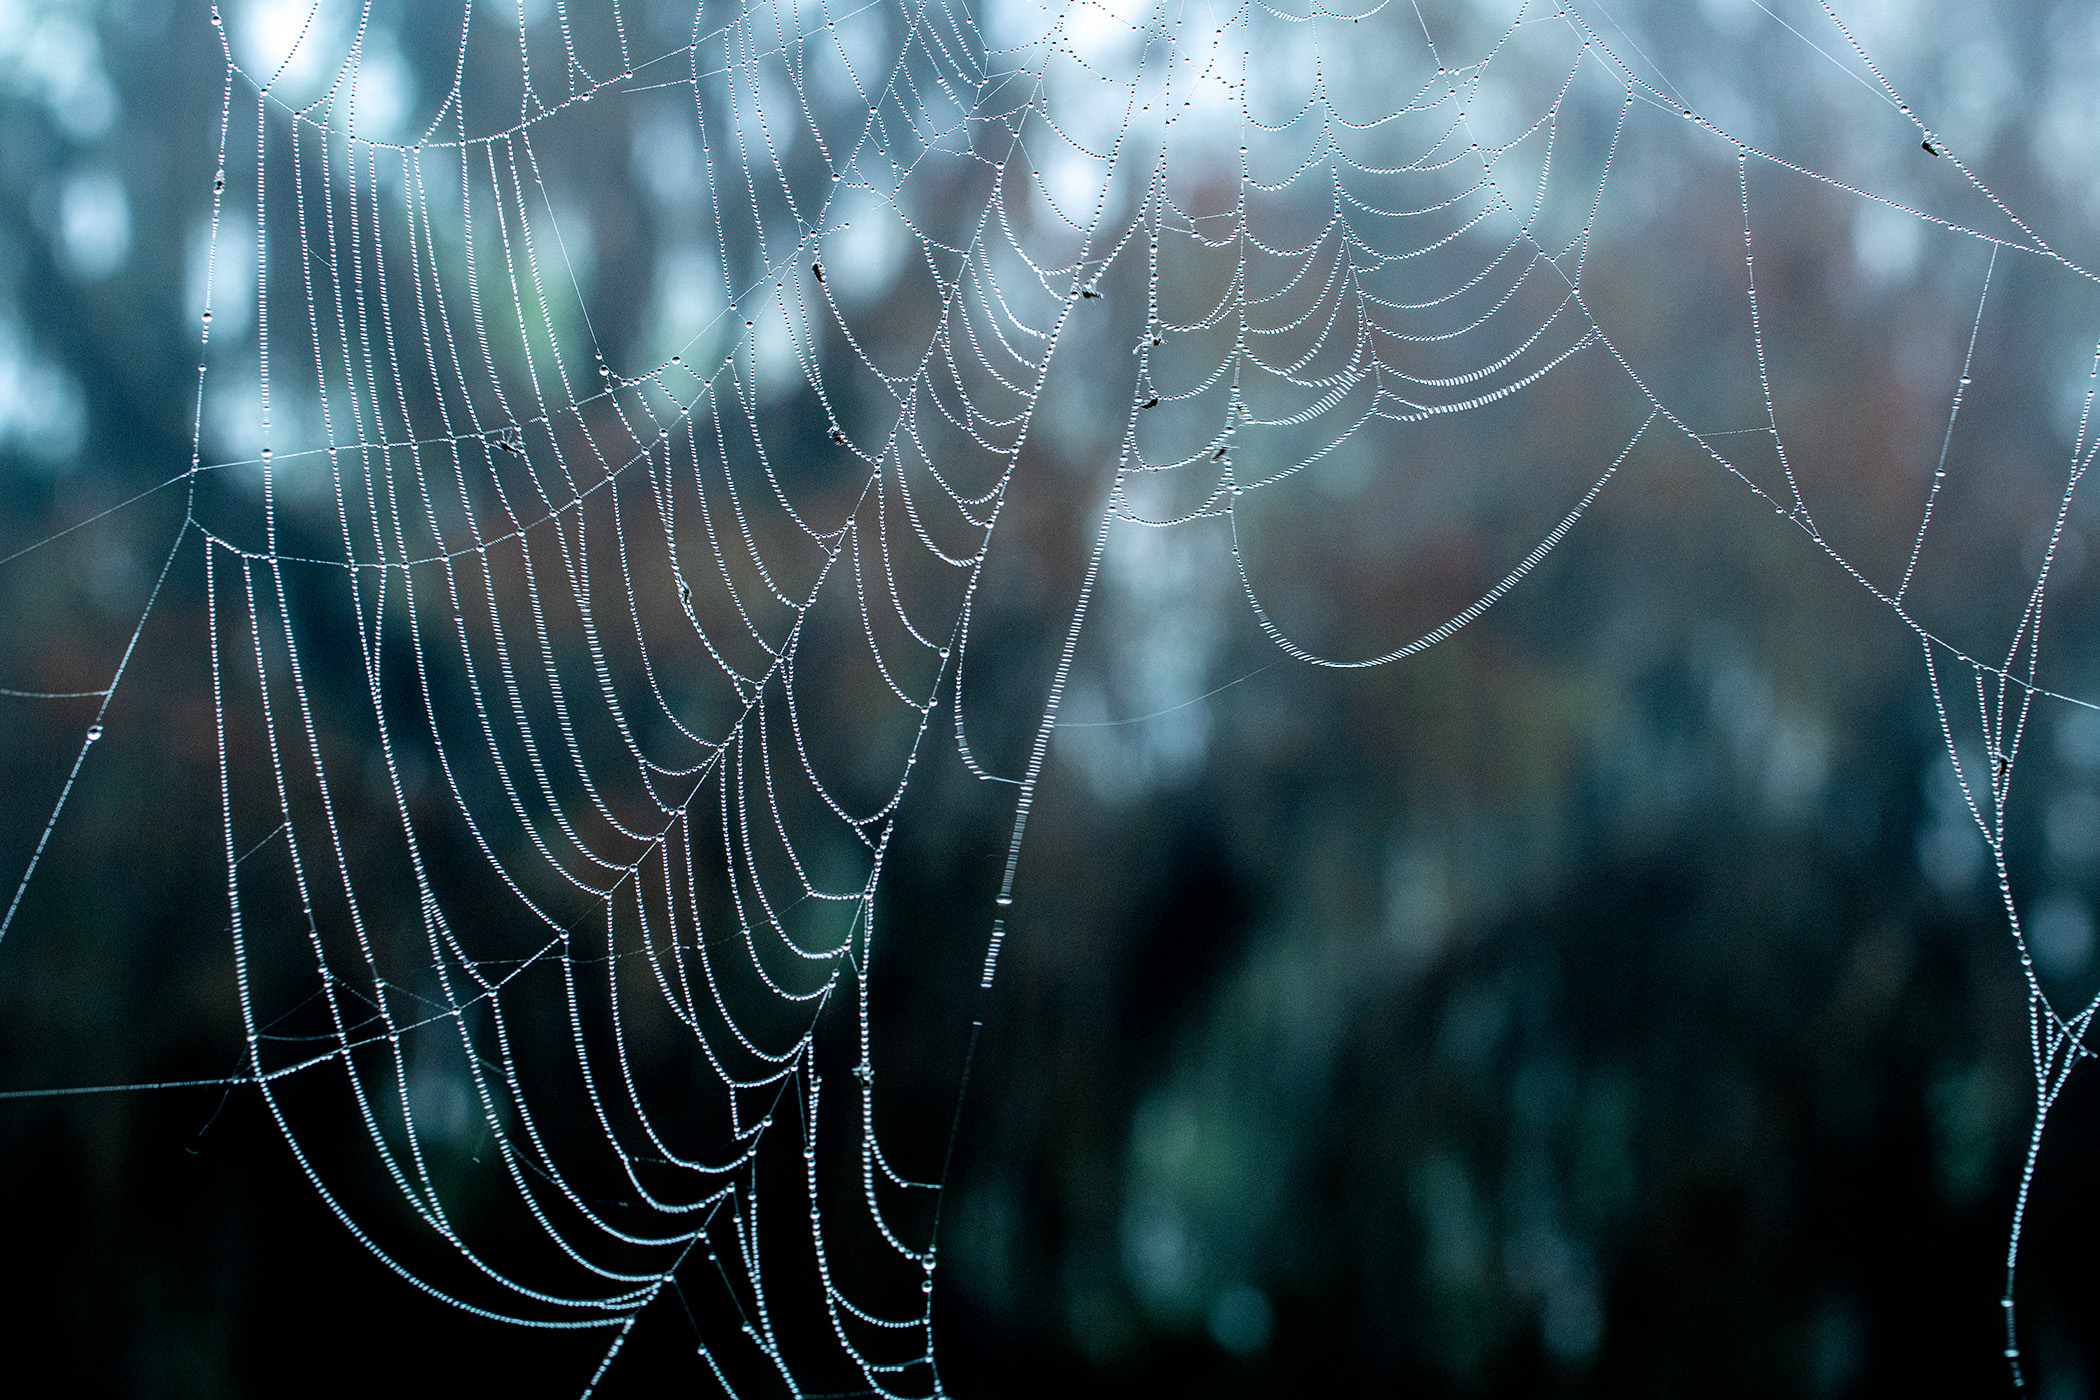 Spiderweb-in-Fog